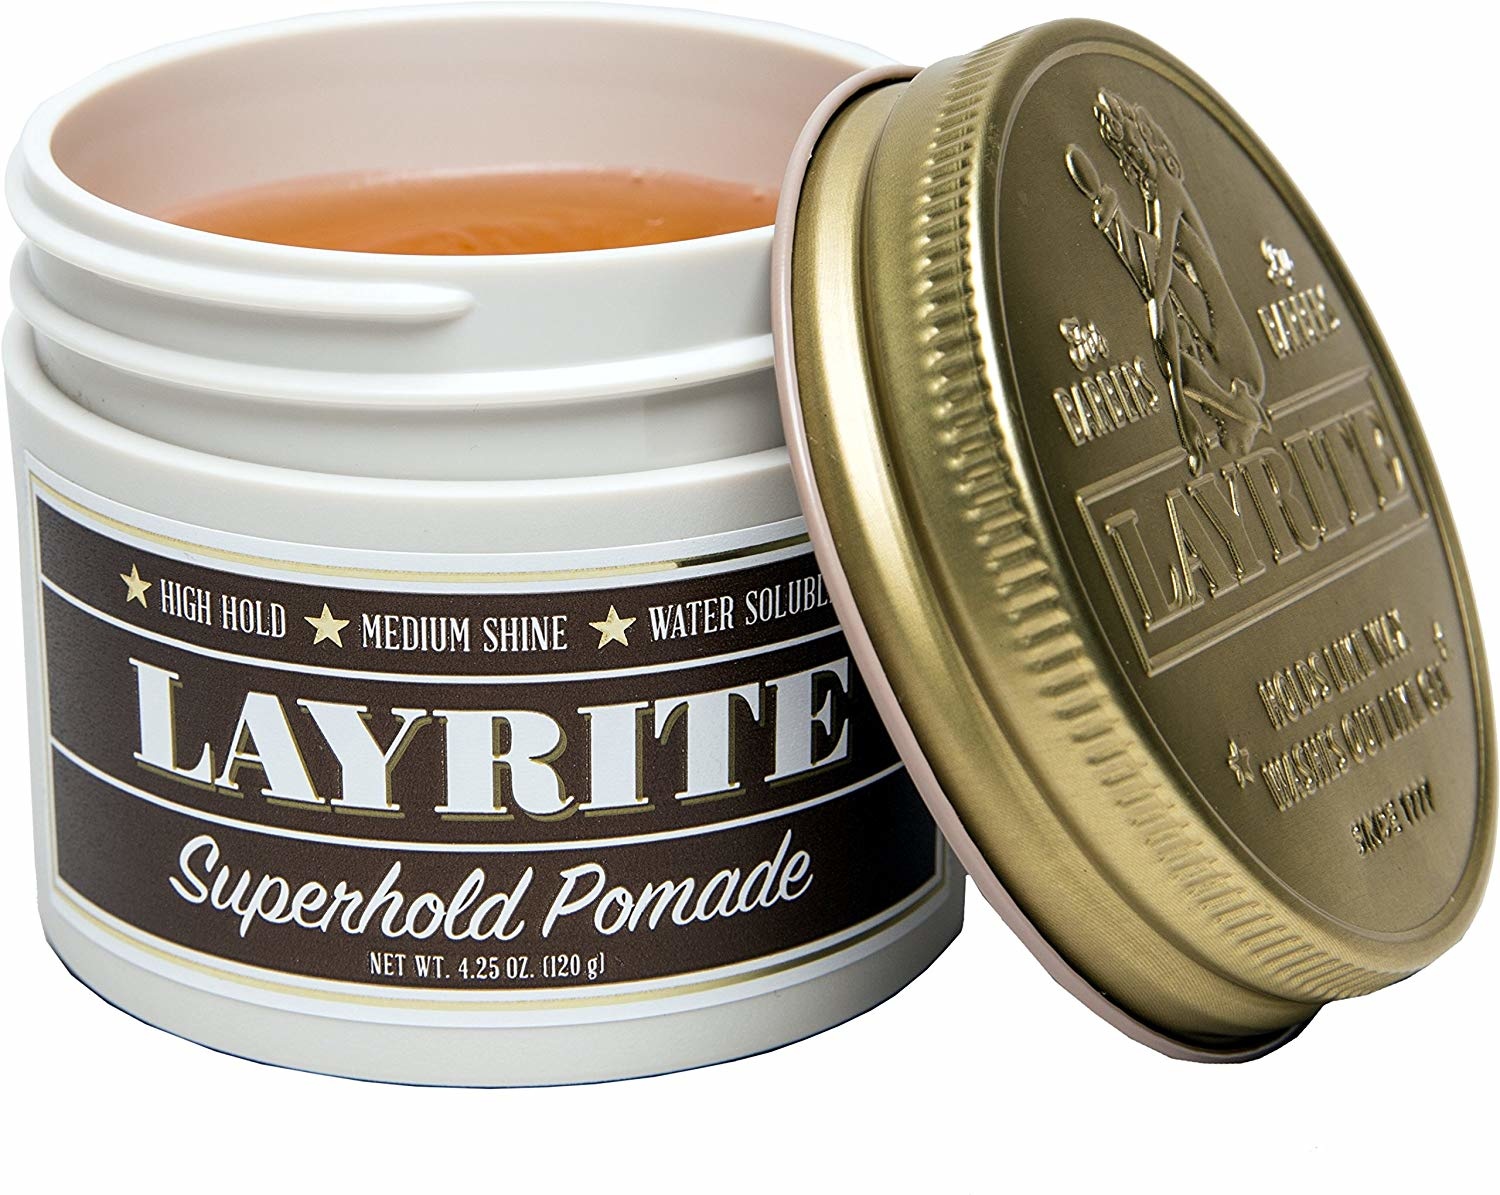 Beg parfum Roux Layrite Original Super Hold Pomade 120g nu Kopen? - Barbierzaak